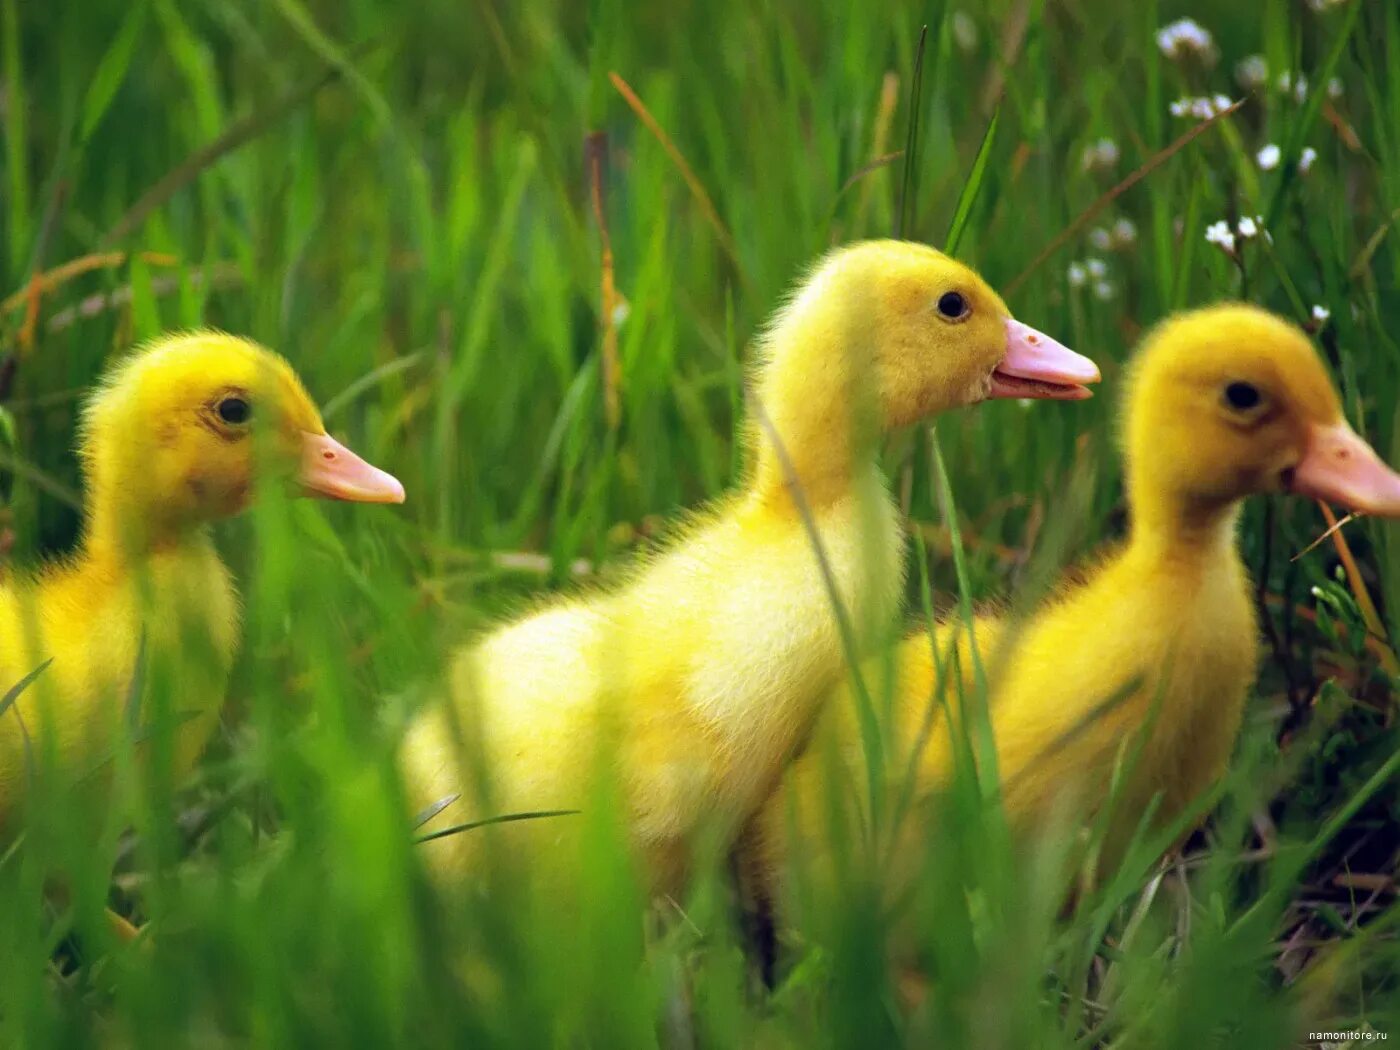 Цыплята утята гусята. Цыпленок и гусенок. Желтый утенок. Утята в траве.